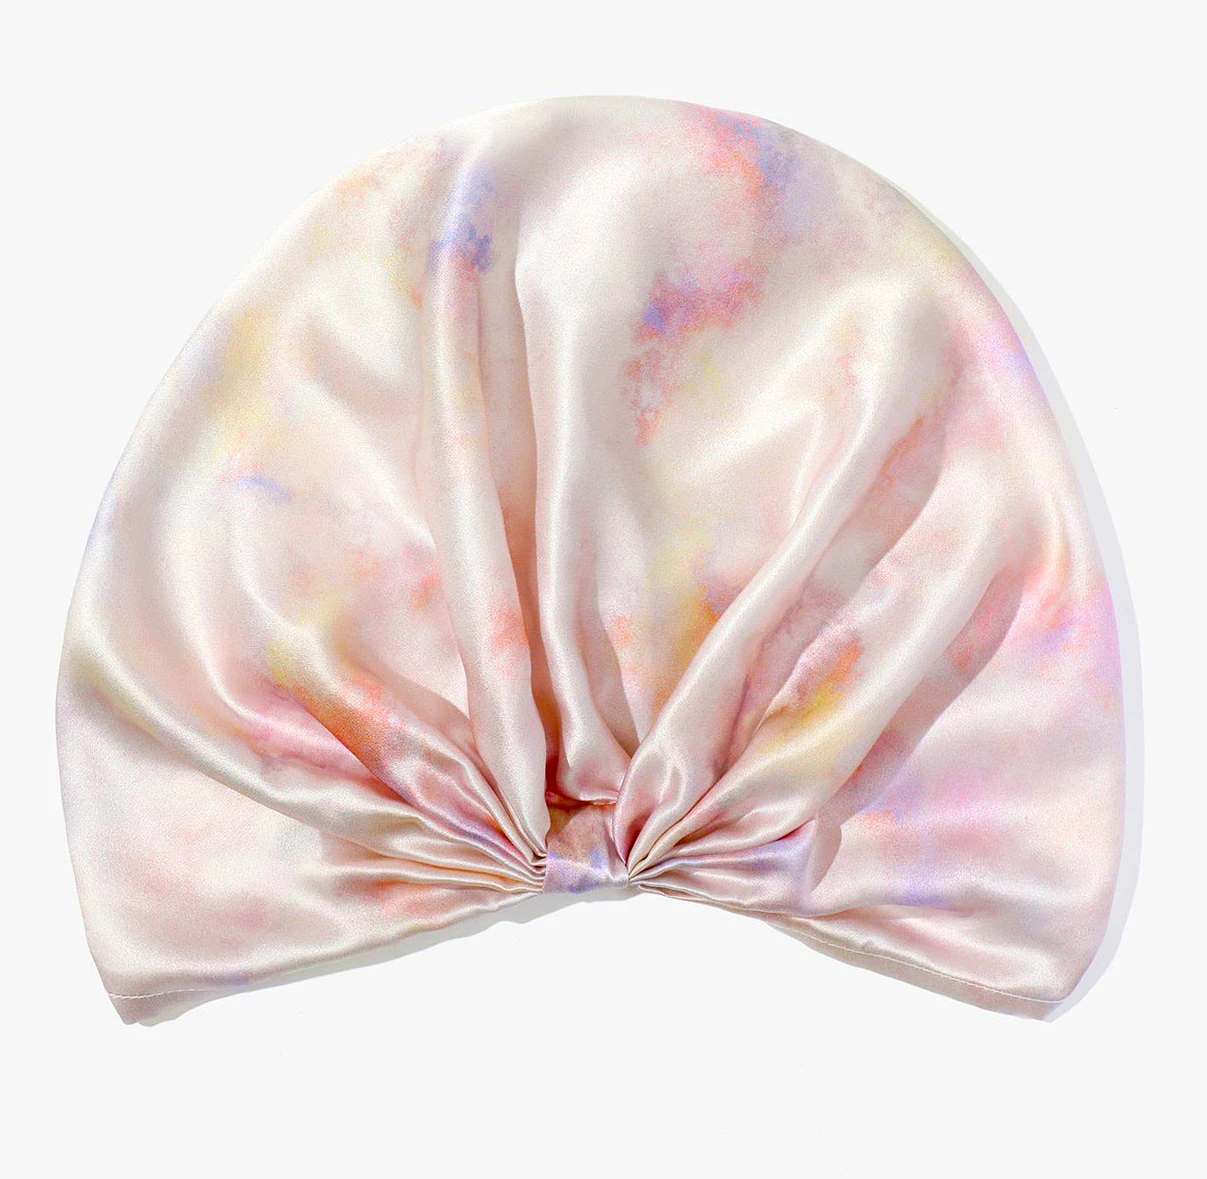 Luxury Satin Braid Bonnet For Women silk pillow case and bonnet set with drawstring silk lined beanie